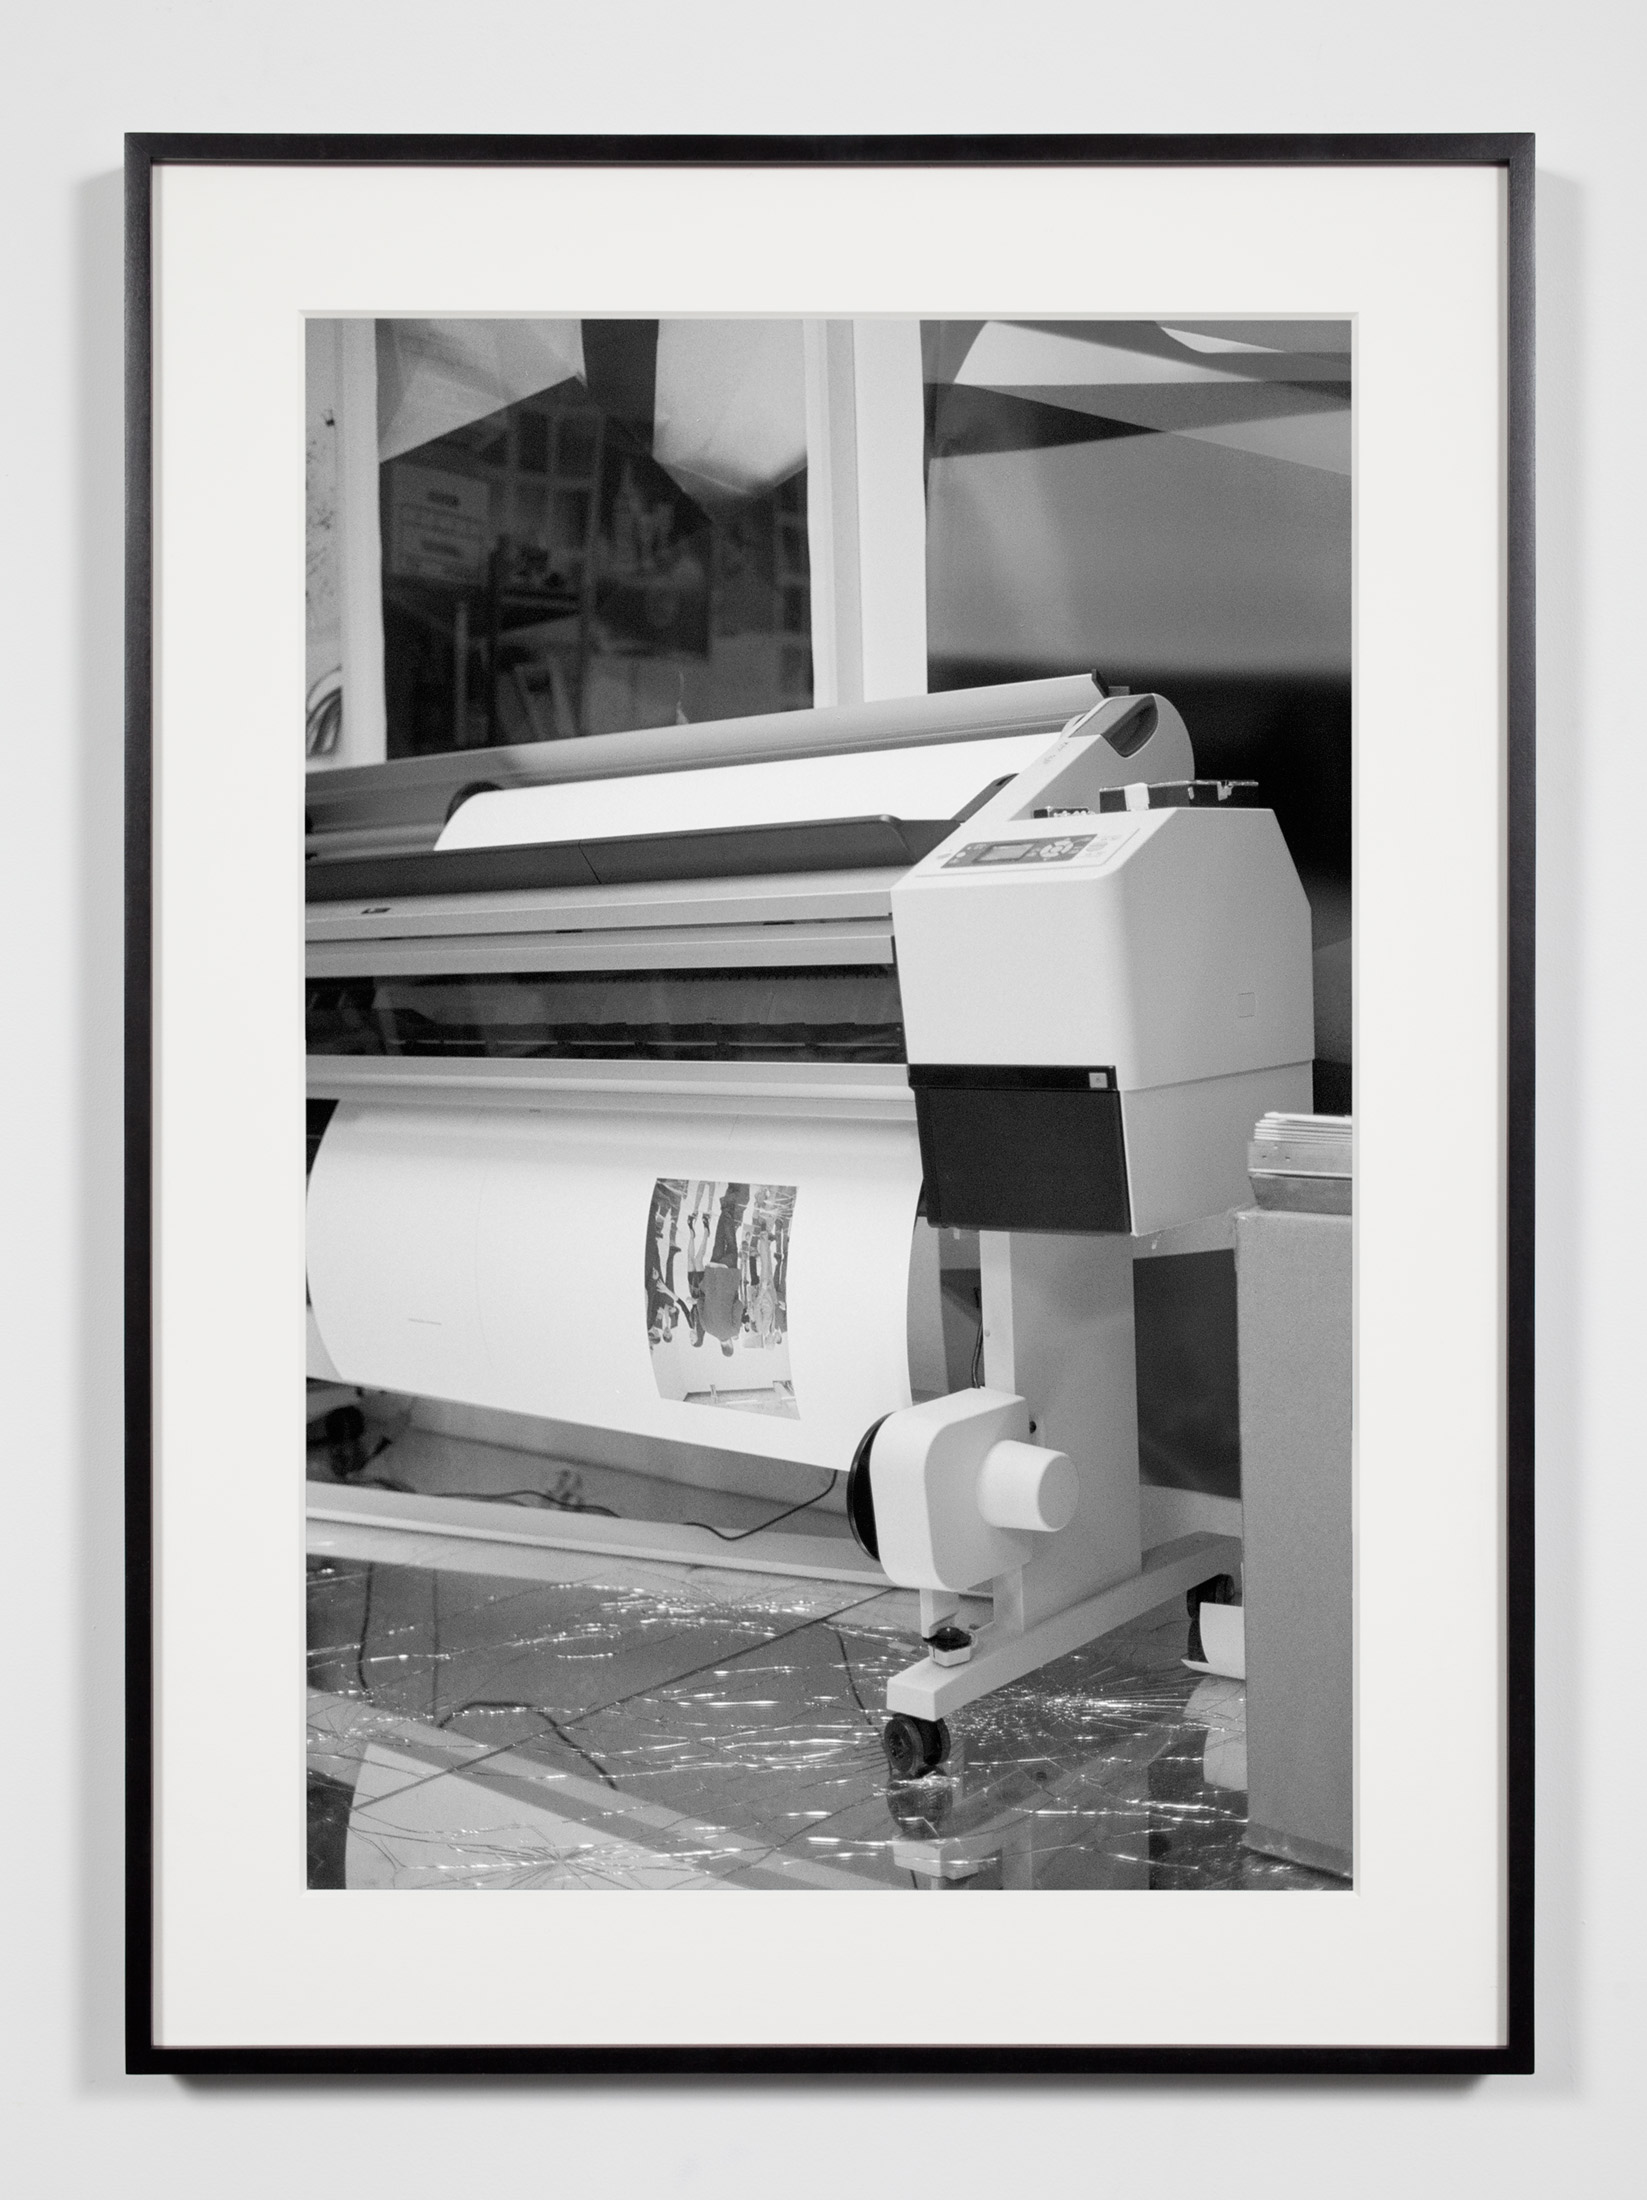   Artist Studio, Wide-Format Inkjet Printer, Los Angeles, California, December 9, 2010    2011   Epson Ultrachrome K3 archival ink jet print on Hahnemühle Photo Rag paper  36 3/8 x 26 3/8 inches   Industrial Portraits, 2008–     